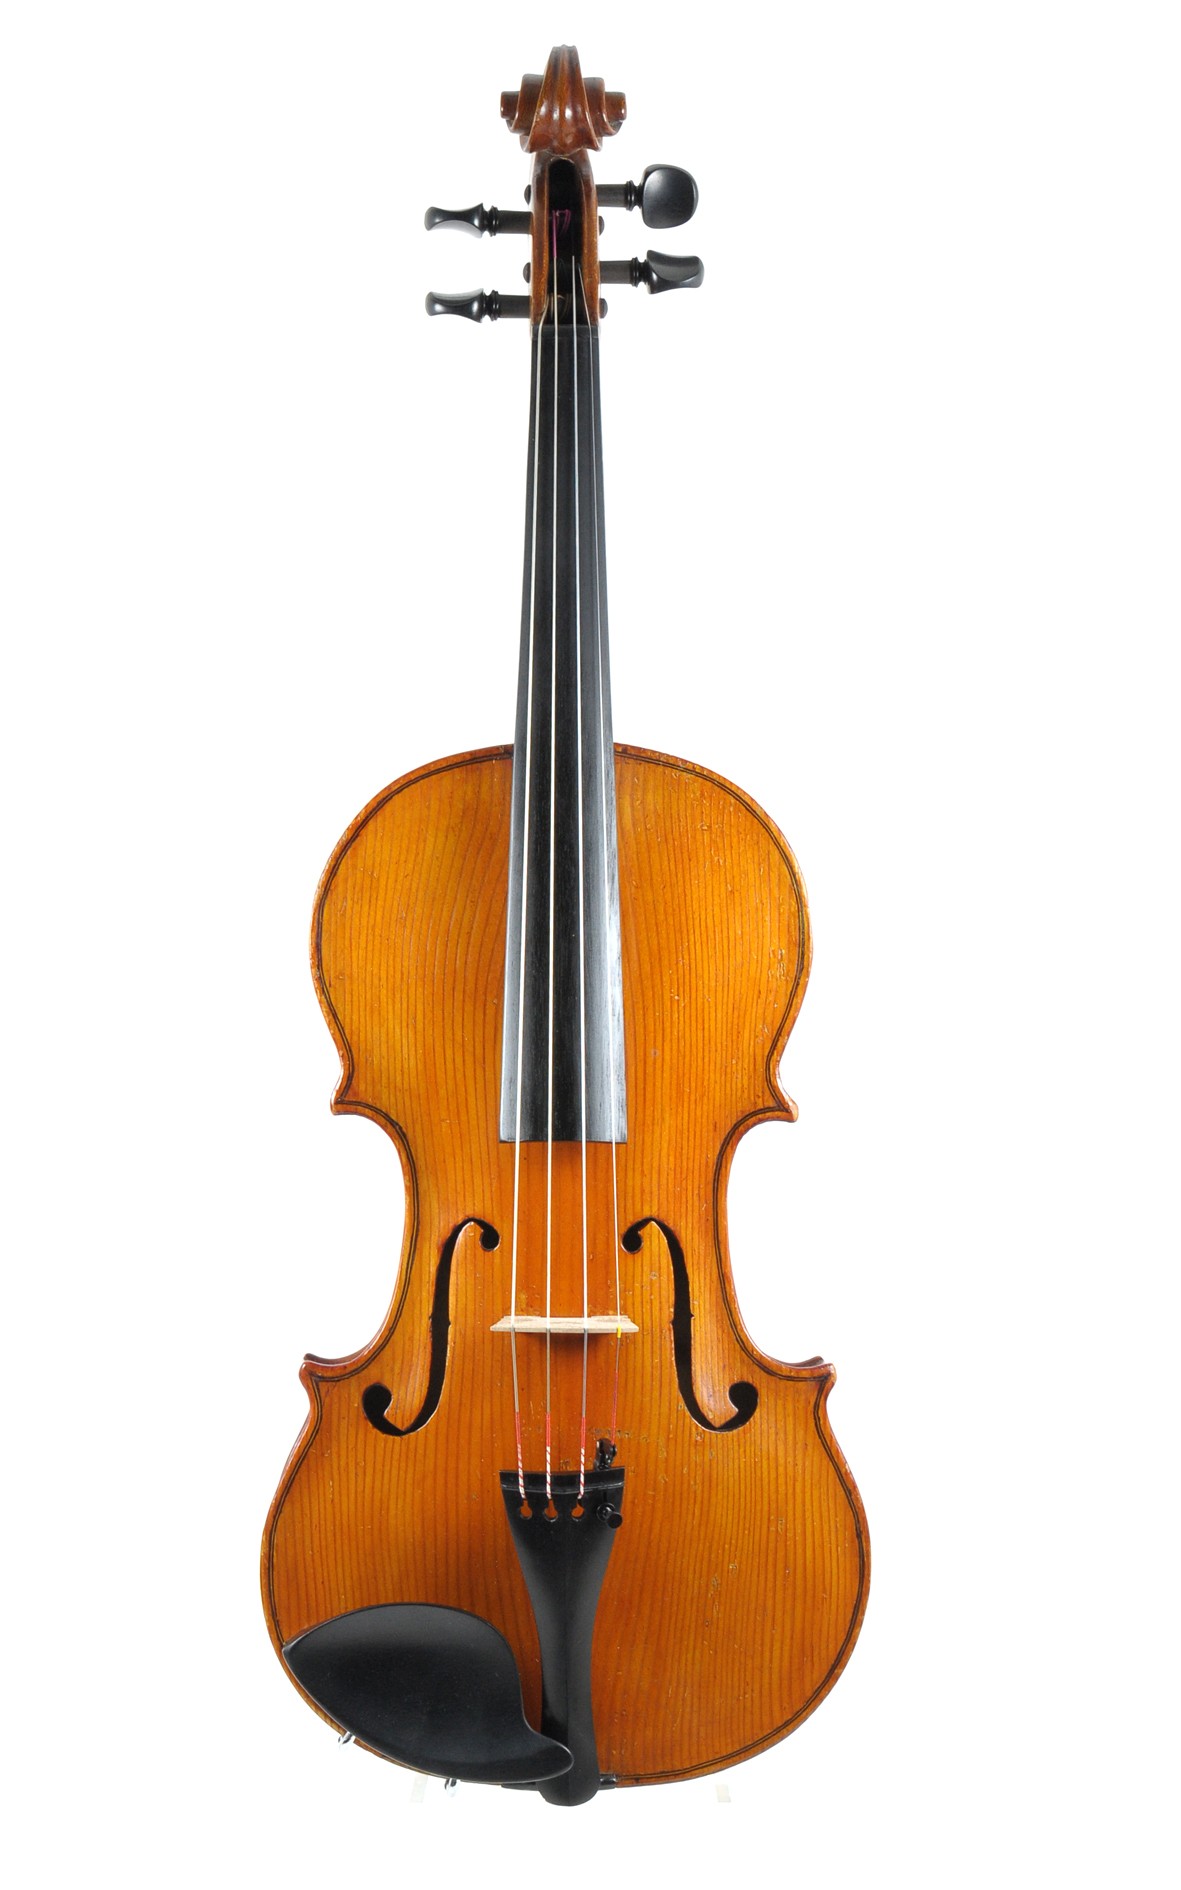 George F. Johnston, tropical wood violin, 1949